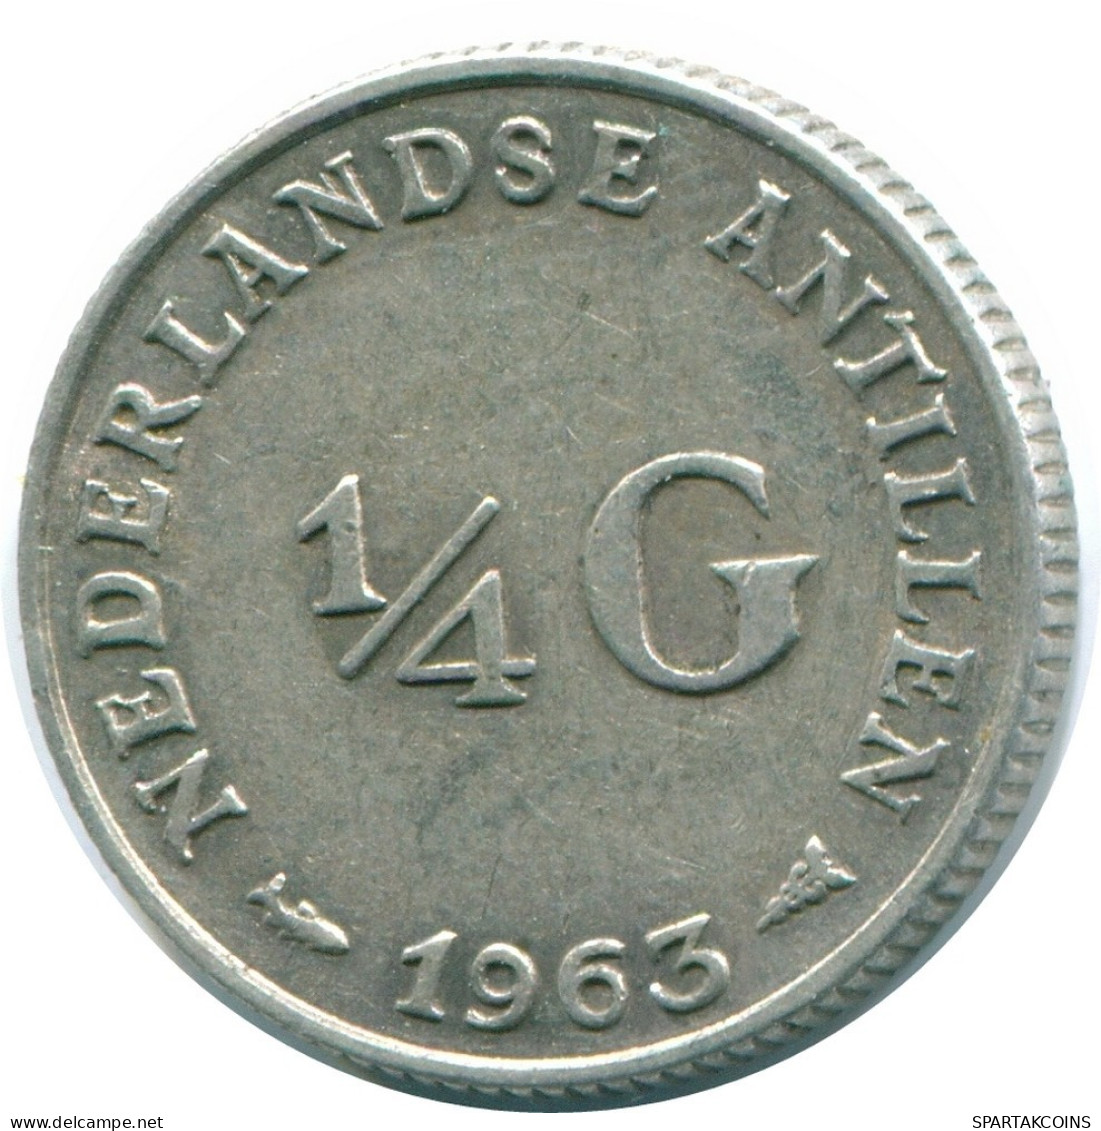 1/4 GULDEN 1963 NIEDERLÄNDISCHE ANTILLEN SILBER Koloniale Münze #NL11226.4.D.A - Netherlands Antilles